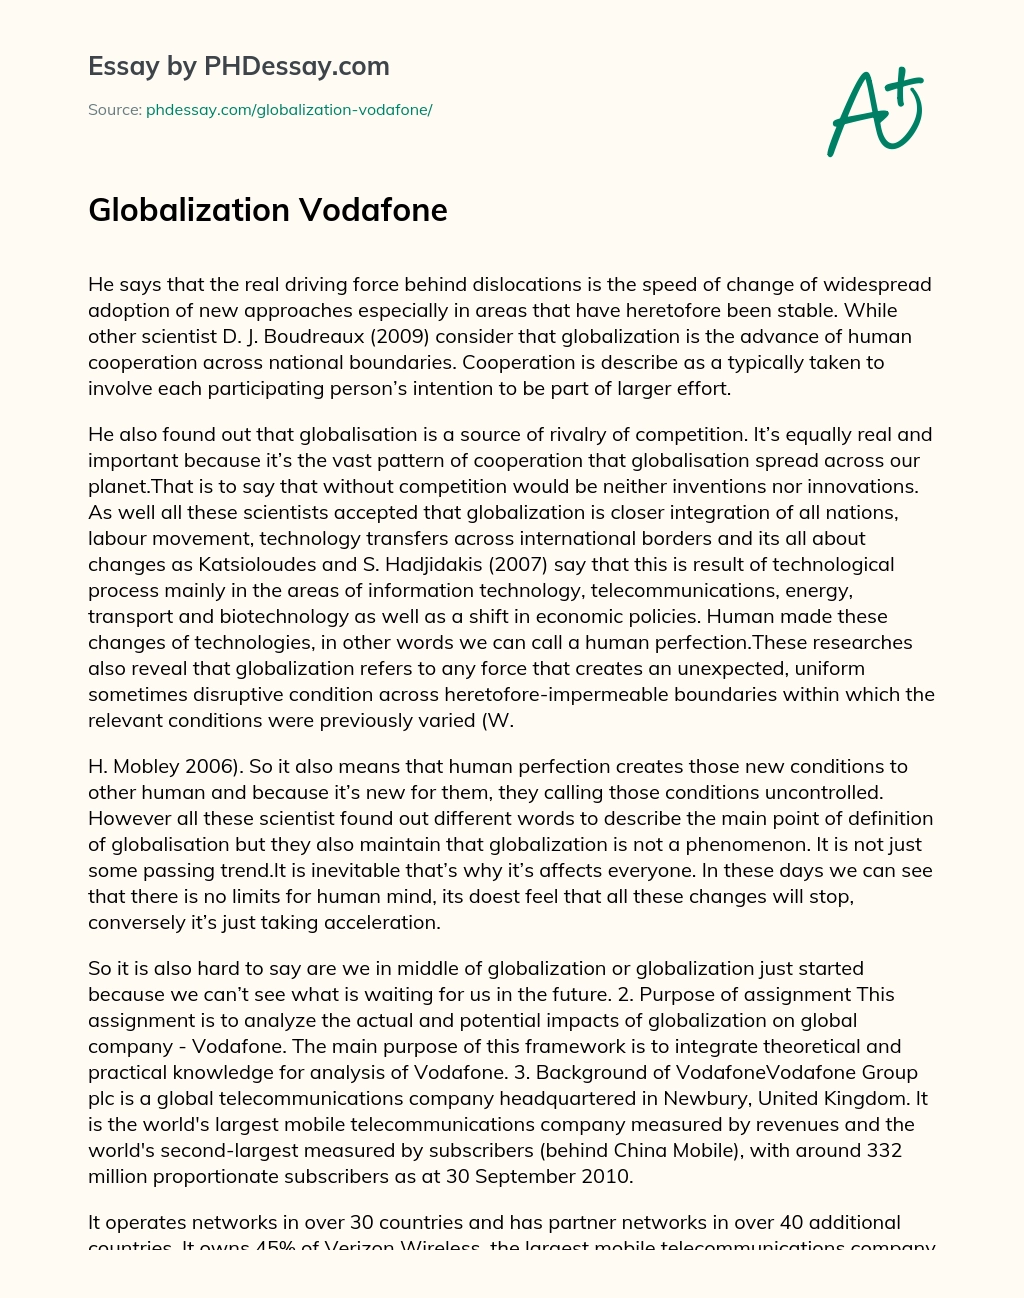 Globalization Vodafone essay